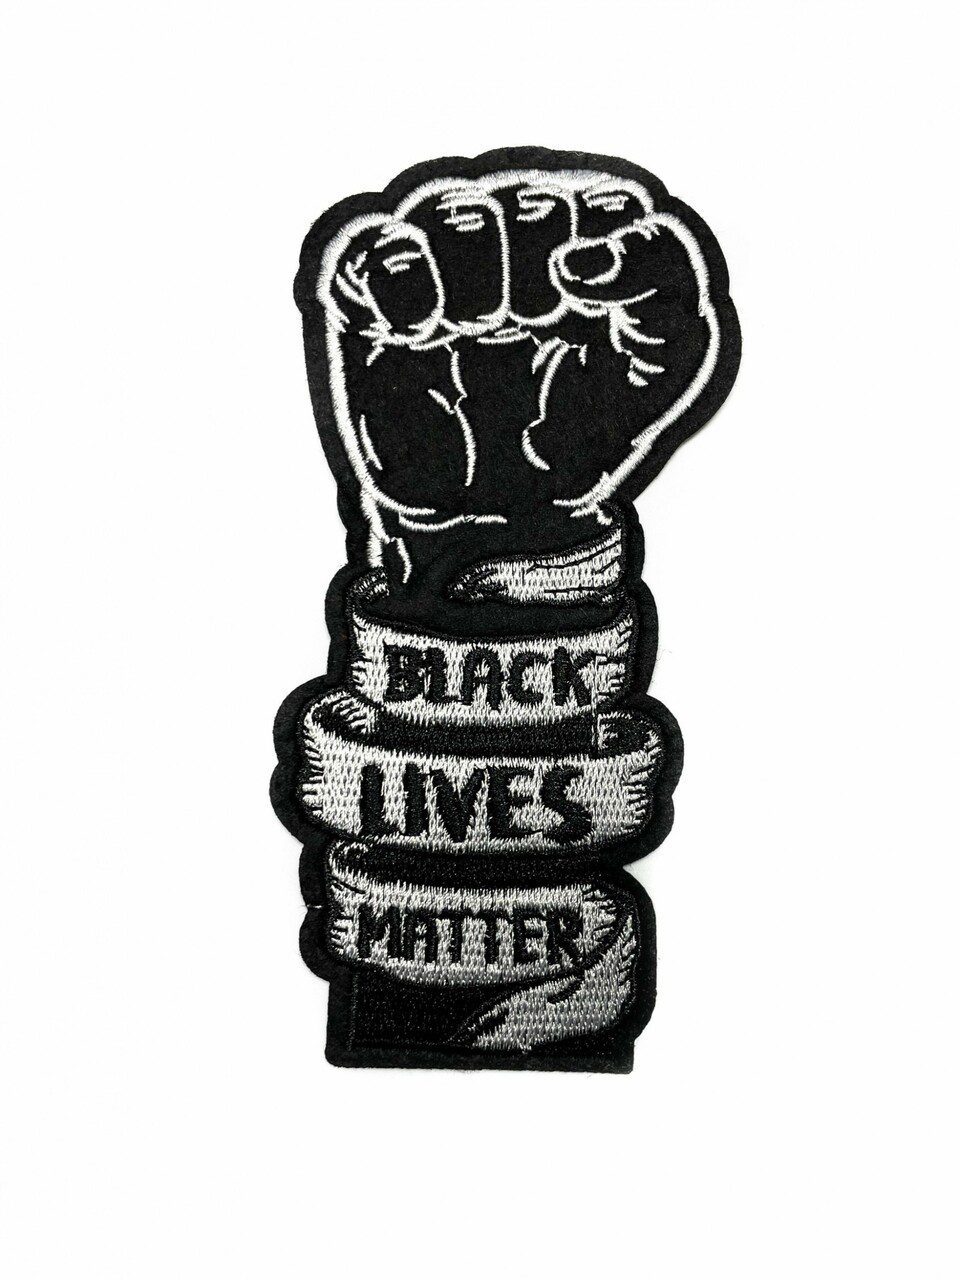 Black Lives Matter embroidered patch